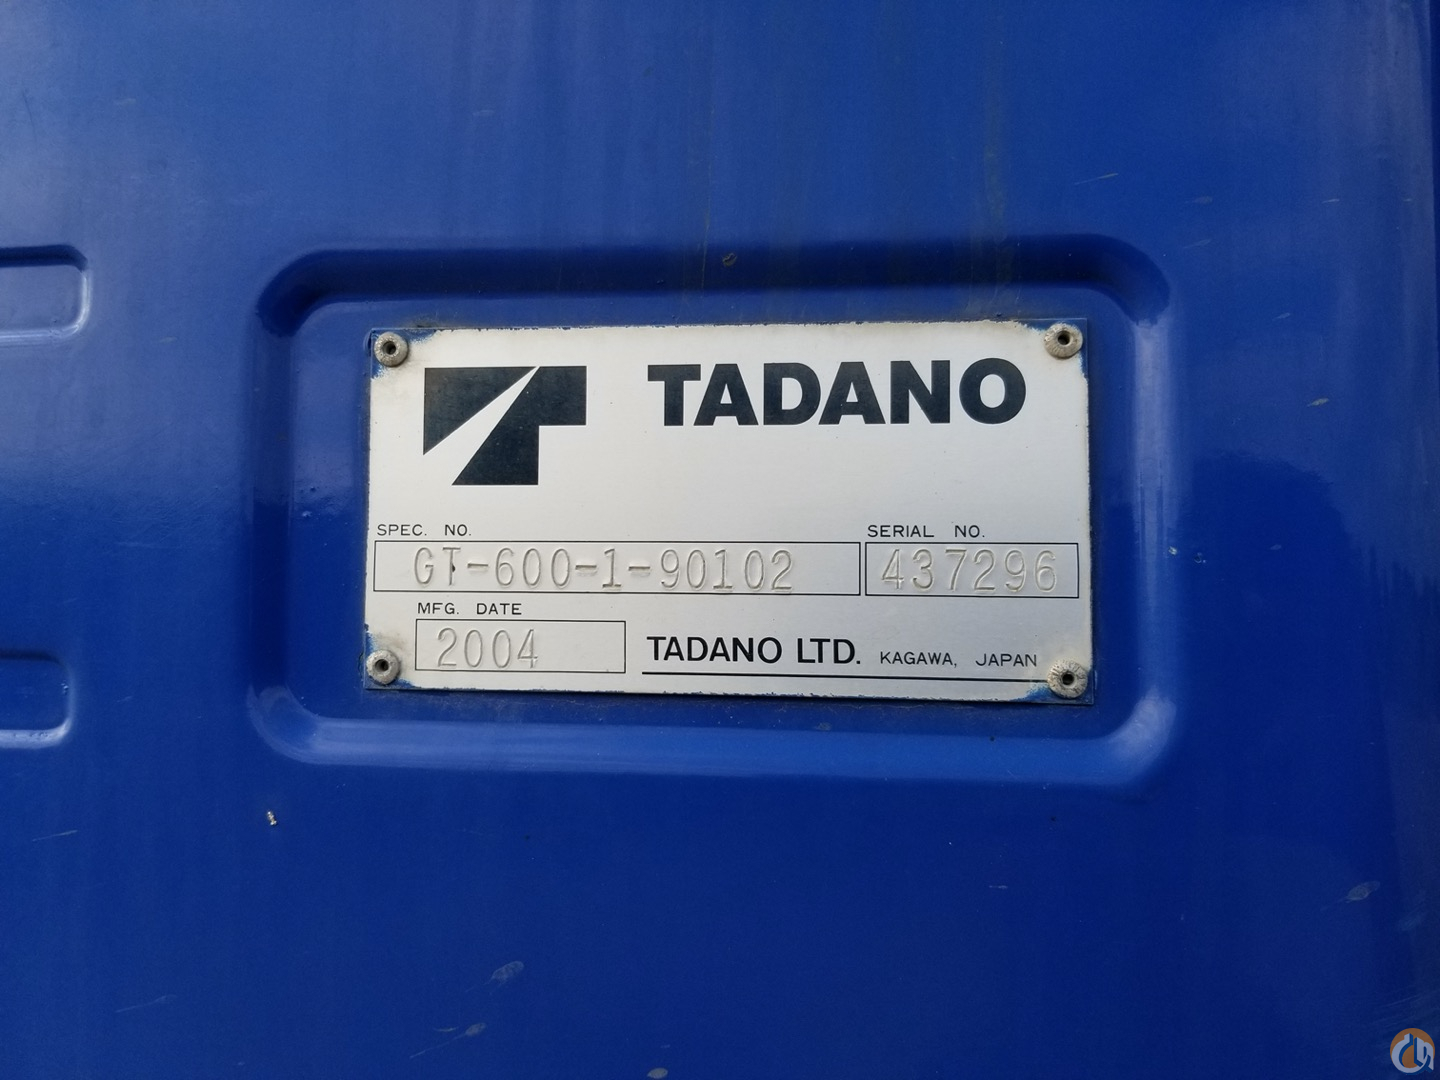 Tadano TT-600XL